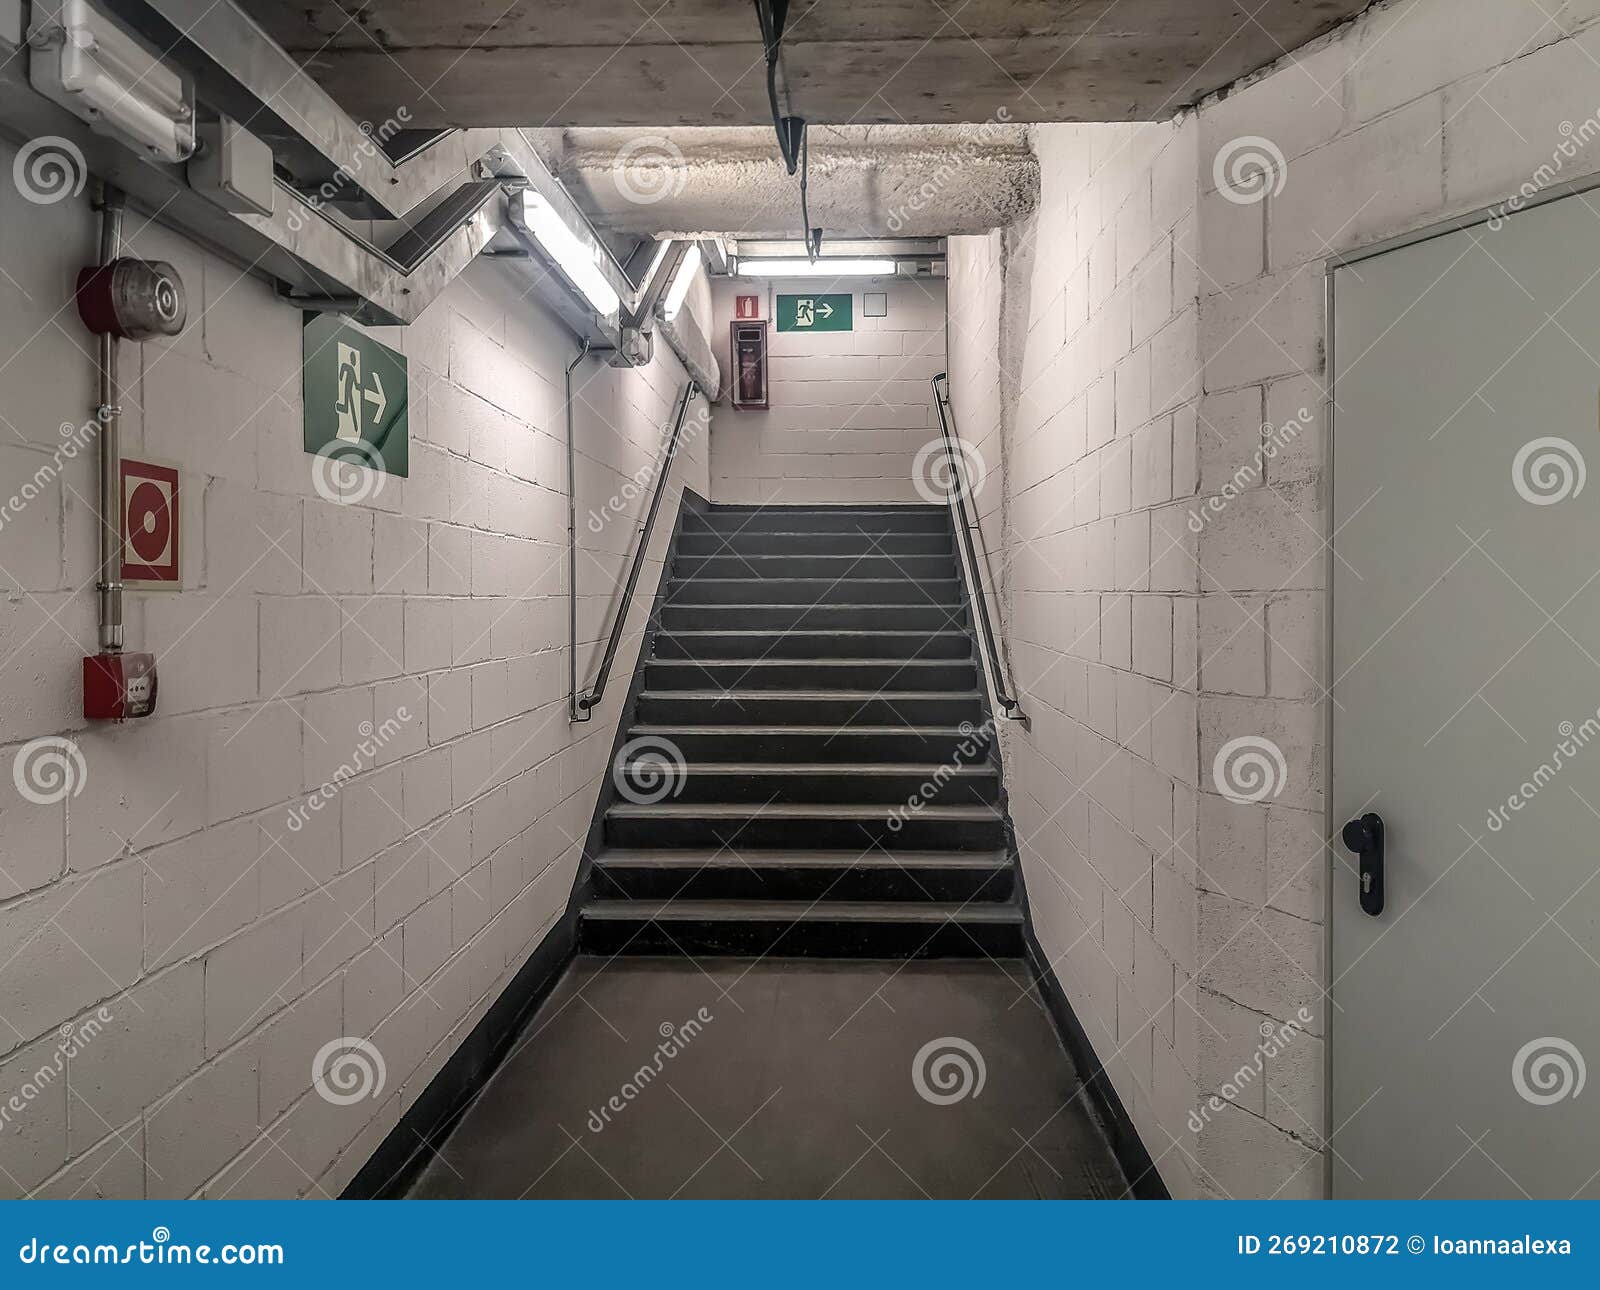 emergency exit at zona universitaria metro station in barcelona, spain